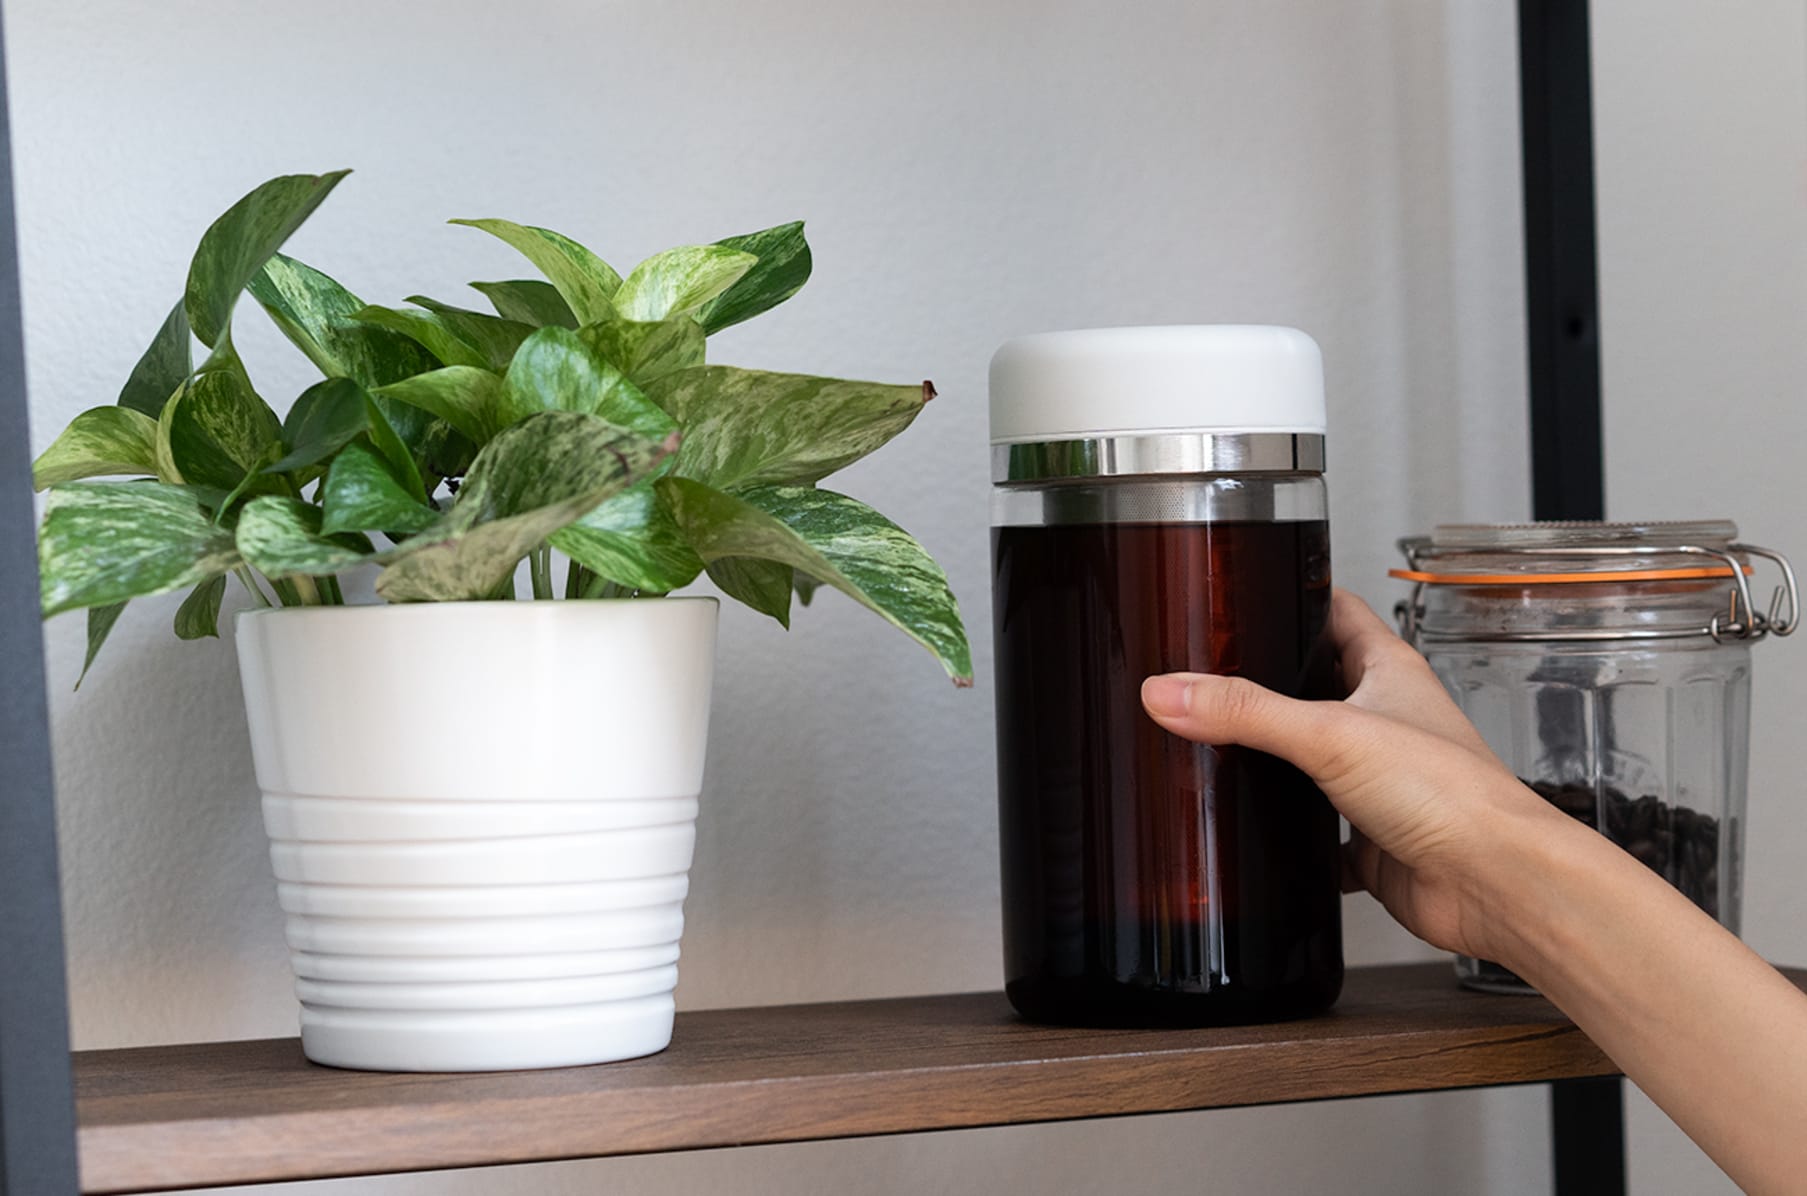 The Complete Shelbru System - Cold Brew Coffee Made Easier by SHELBRU —  Kickstarter